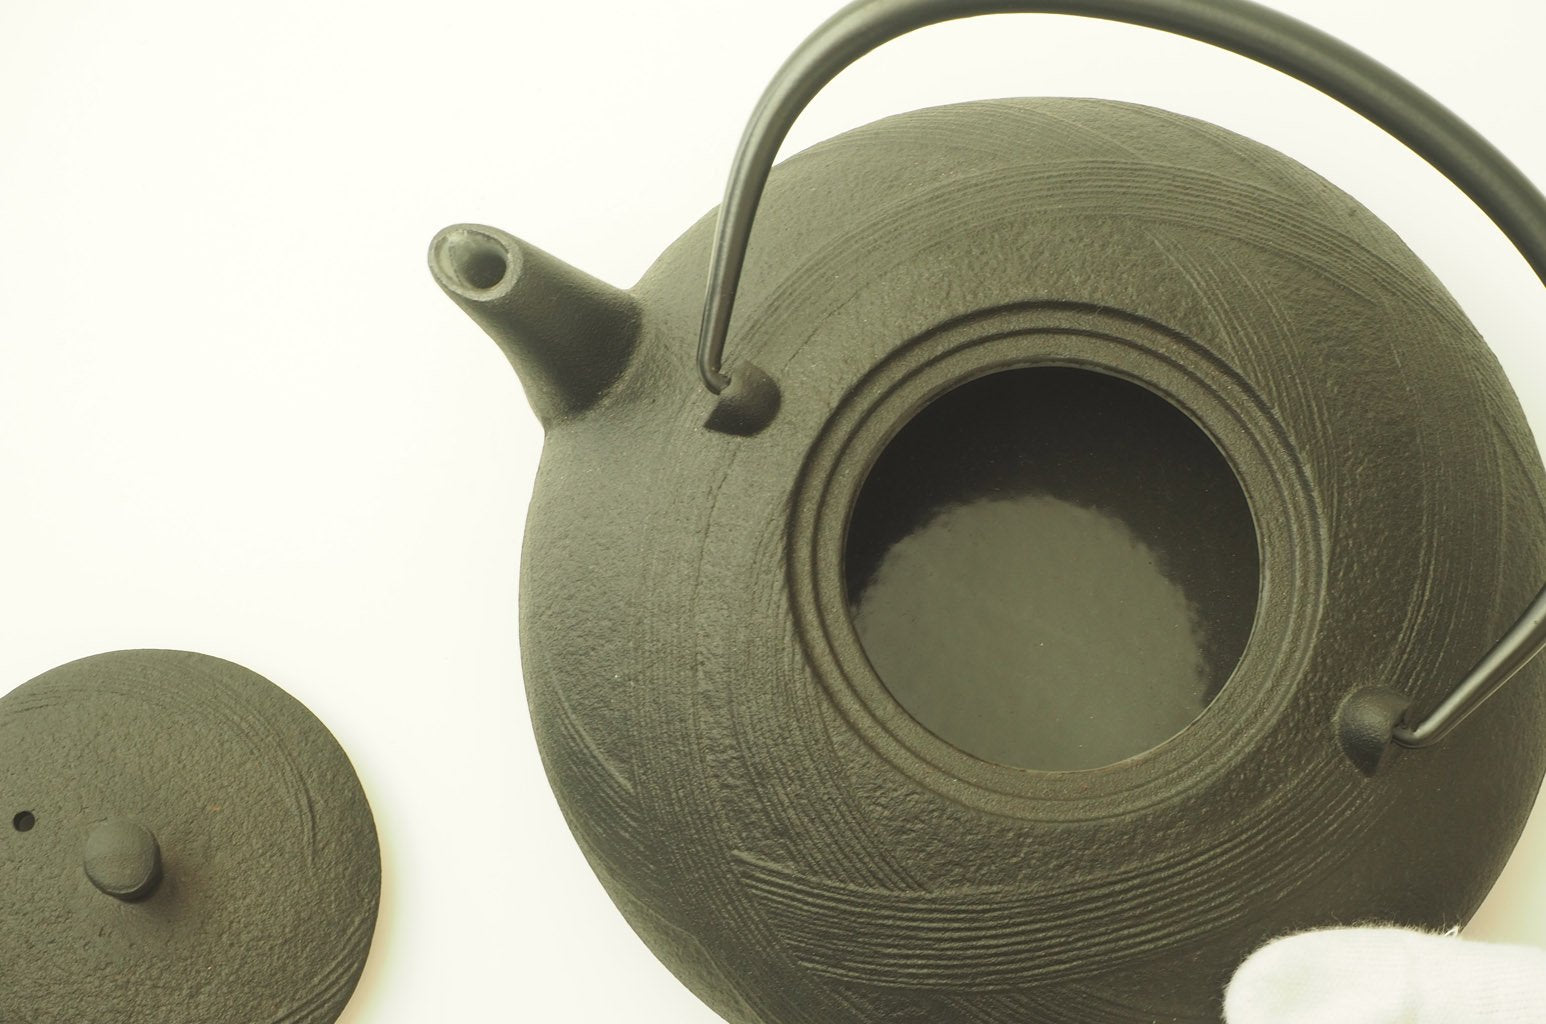 Nambu Ironware Teapot "Hiragata Obi 0.6L"